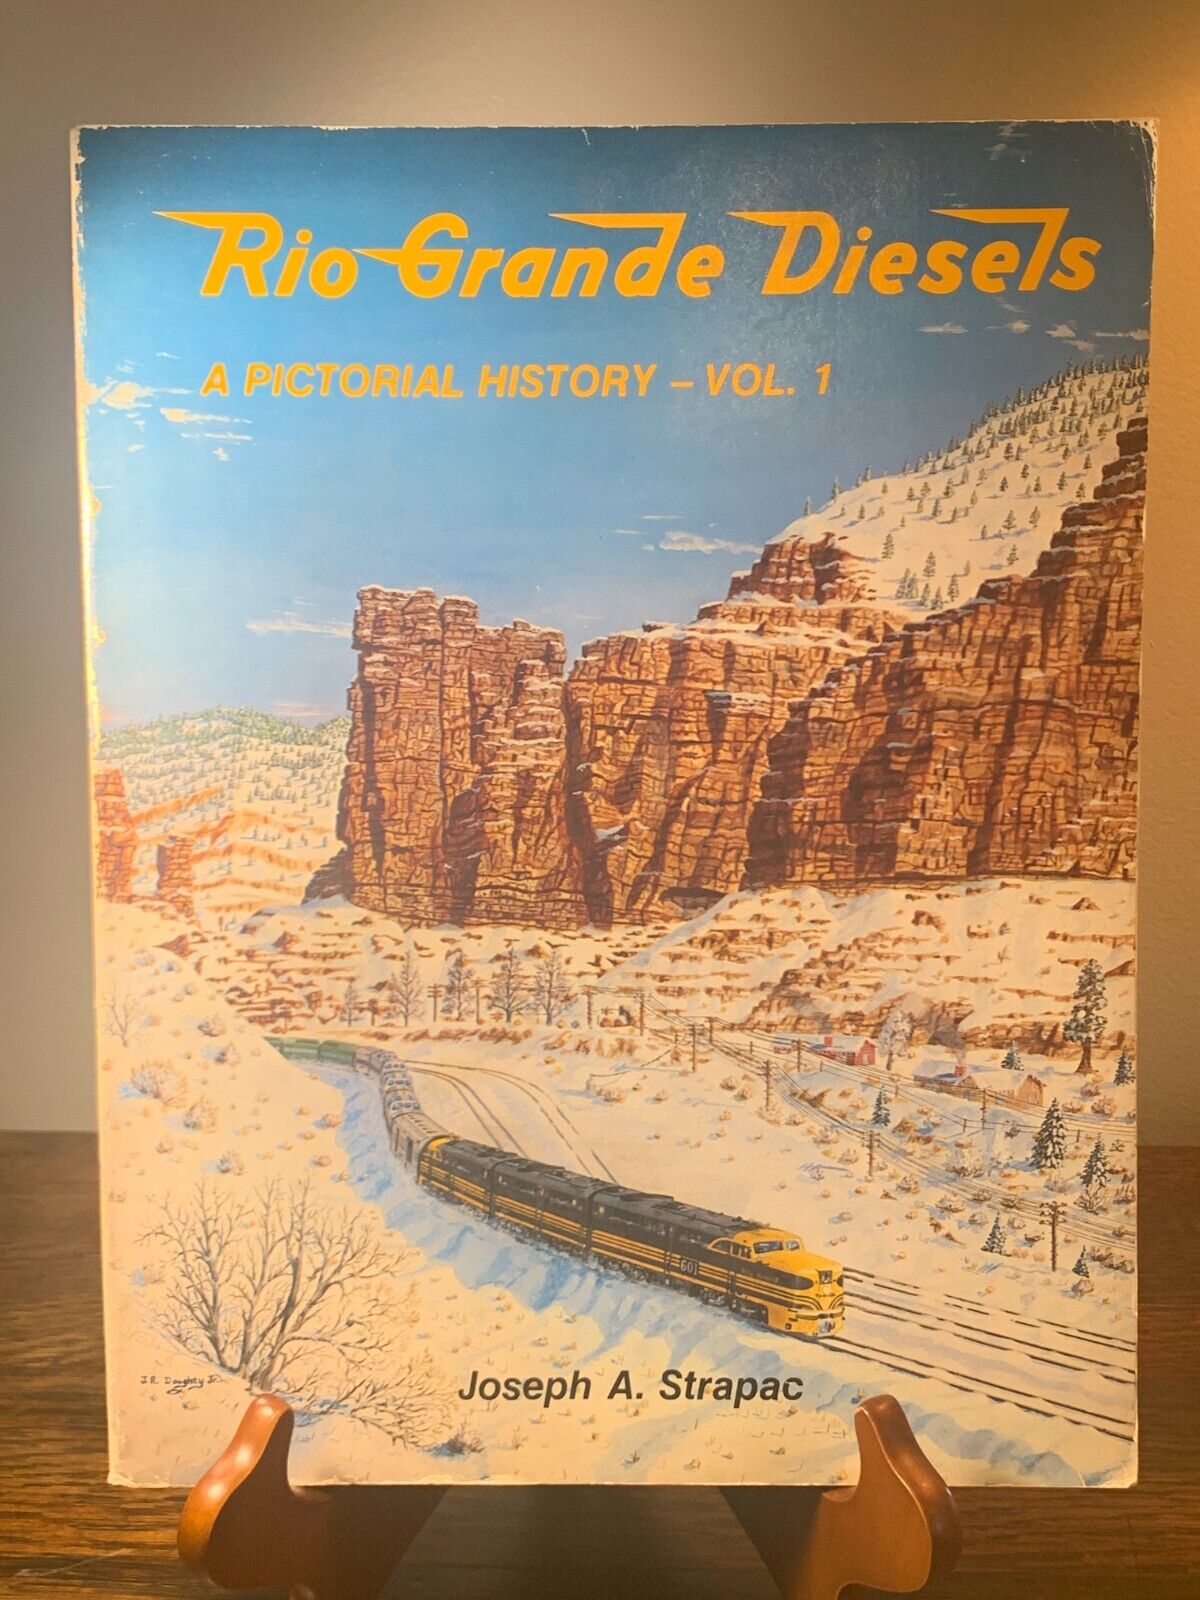 Rio Grande Diesels by Joseph A. Strapac 1983 A Pictoral History Vol. 1